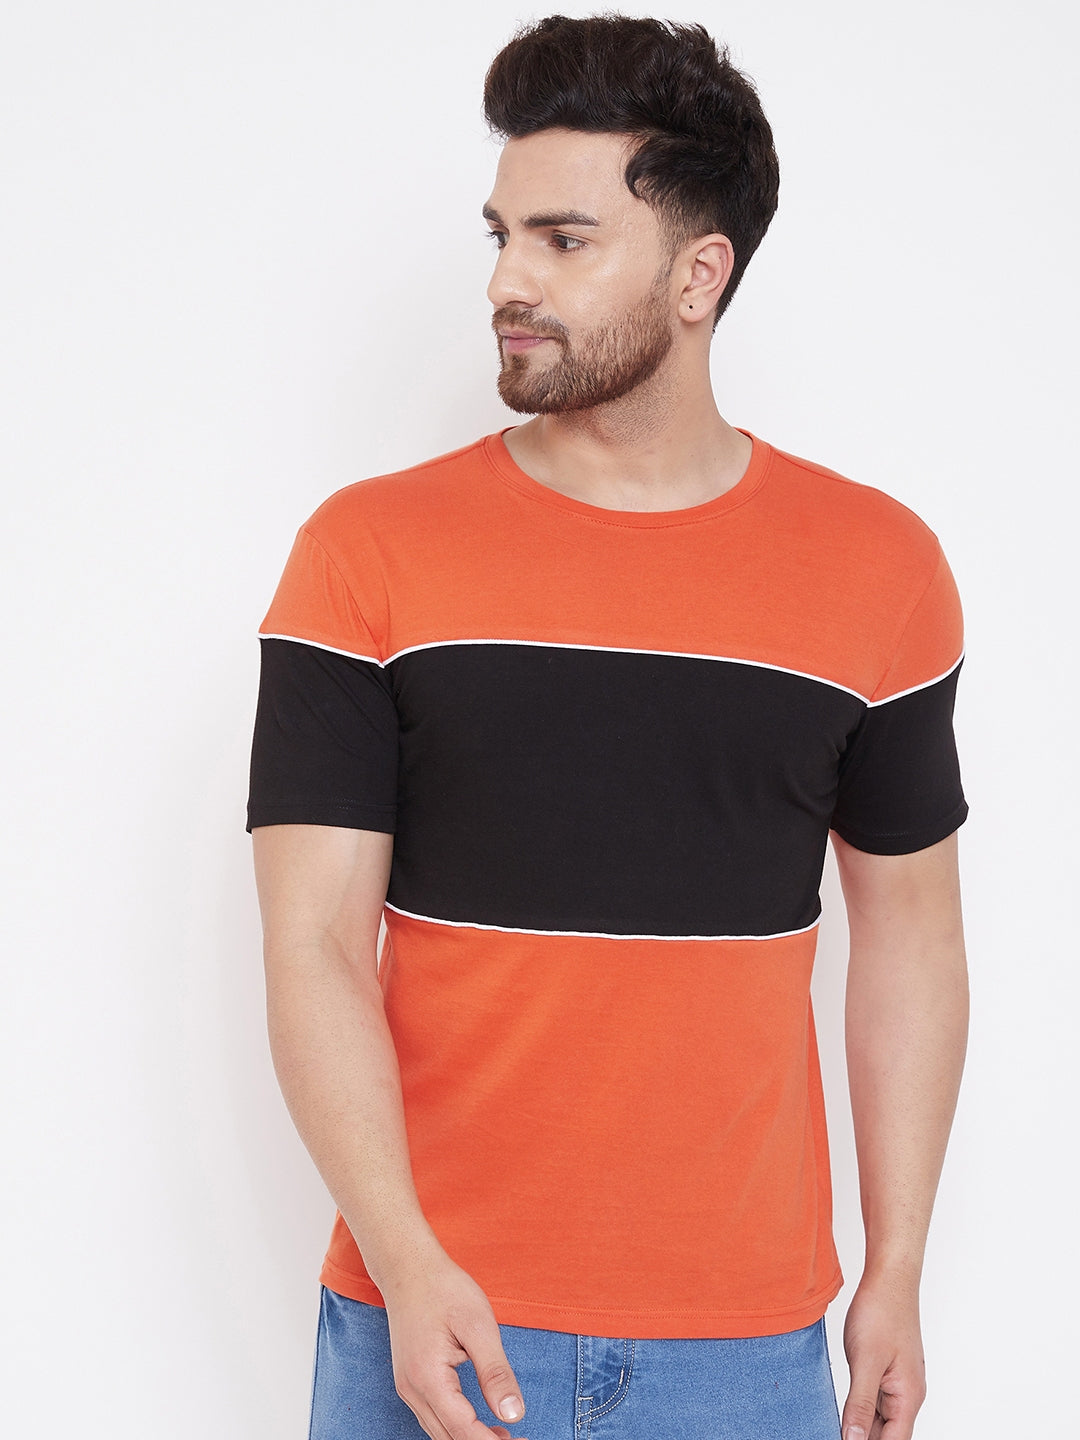 Orange/Black/White Men's Half Sleeves Round Neck T-Shirt